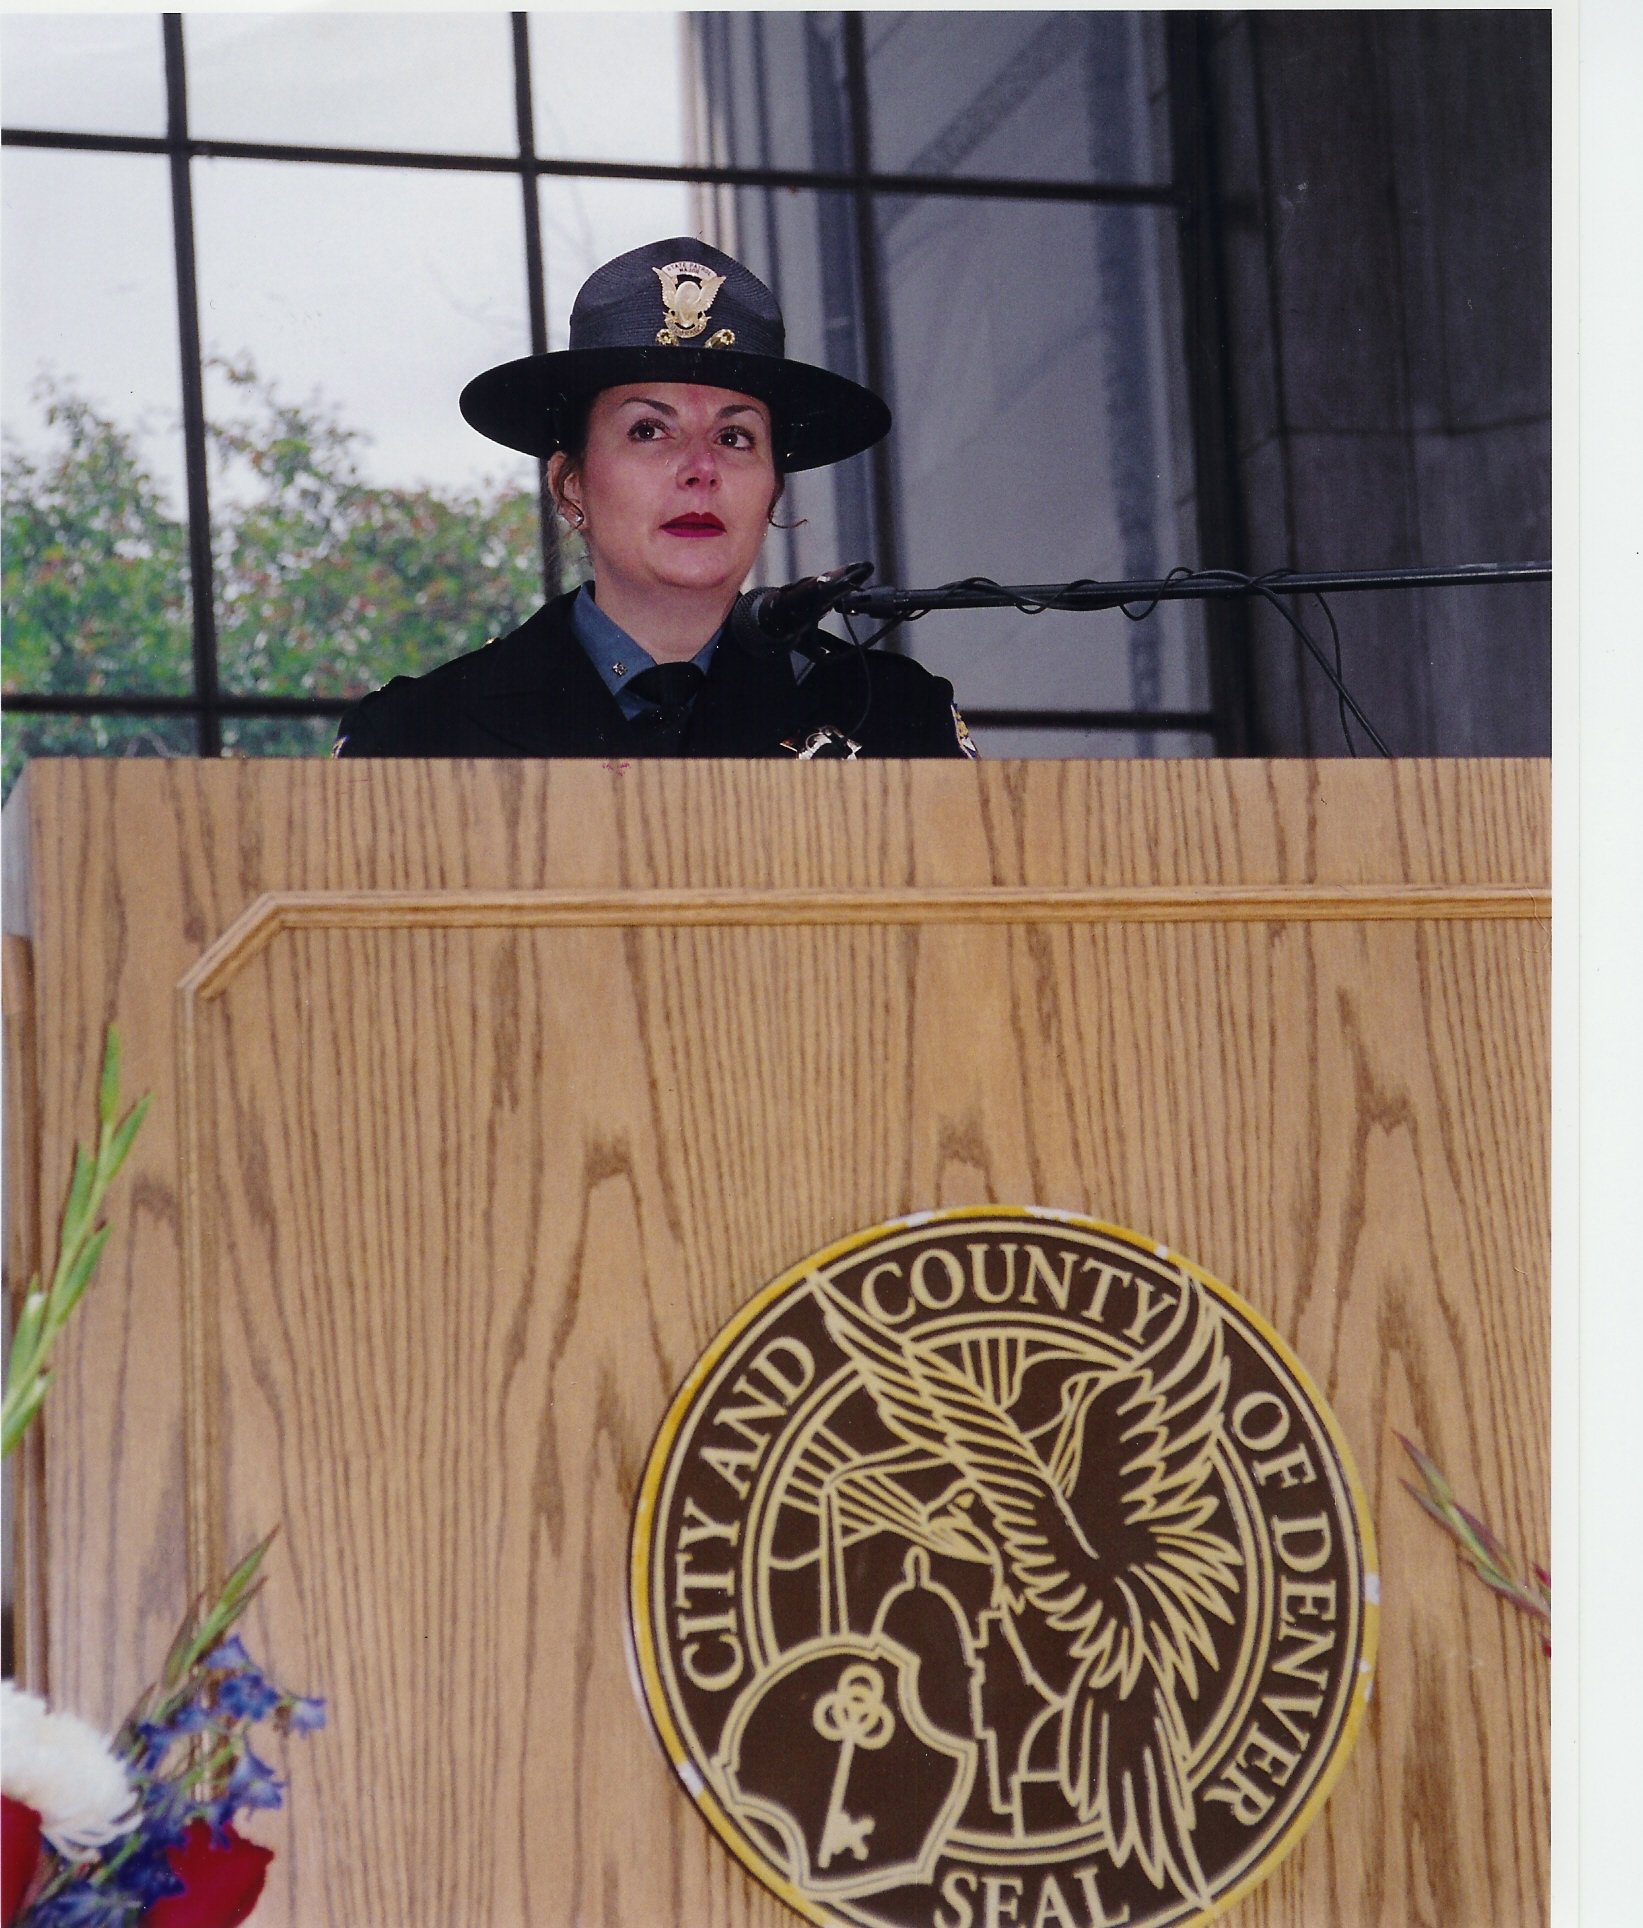 Major Thomas Speaking in Denver at a Fallen Officer Event, 2002